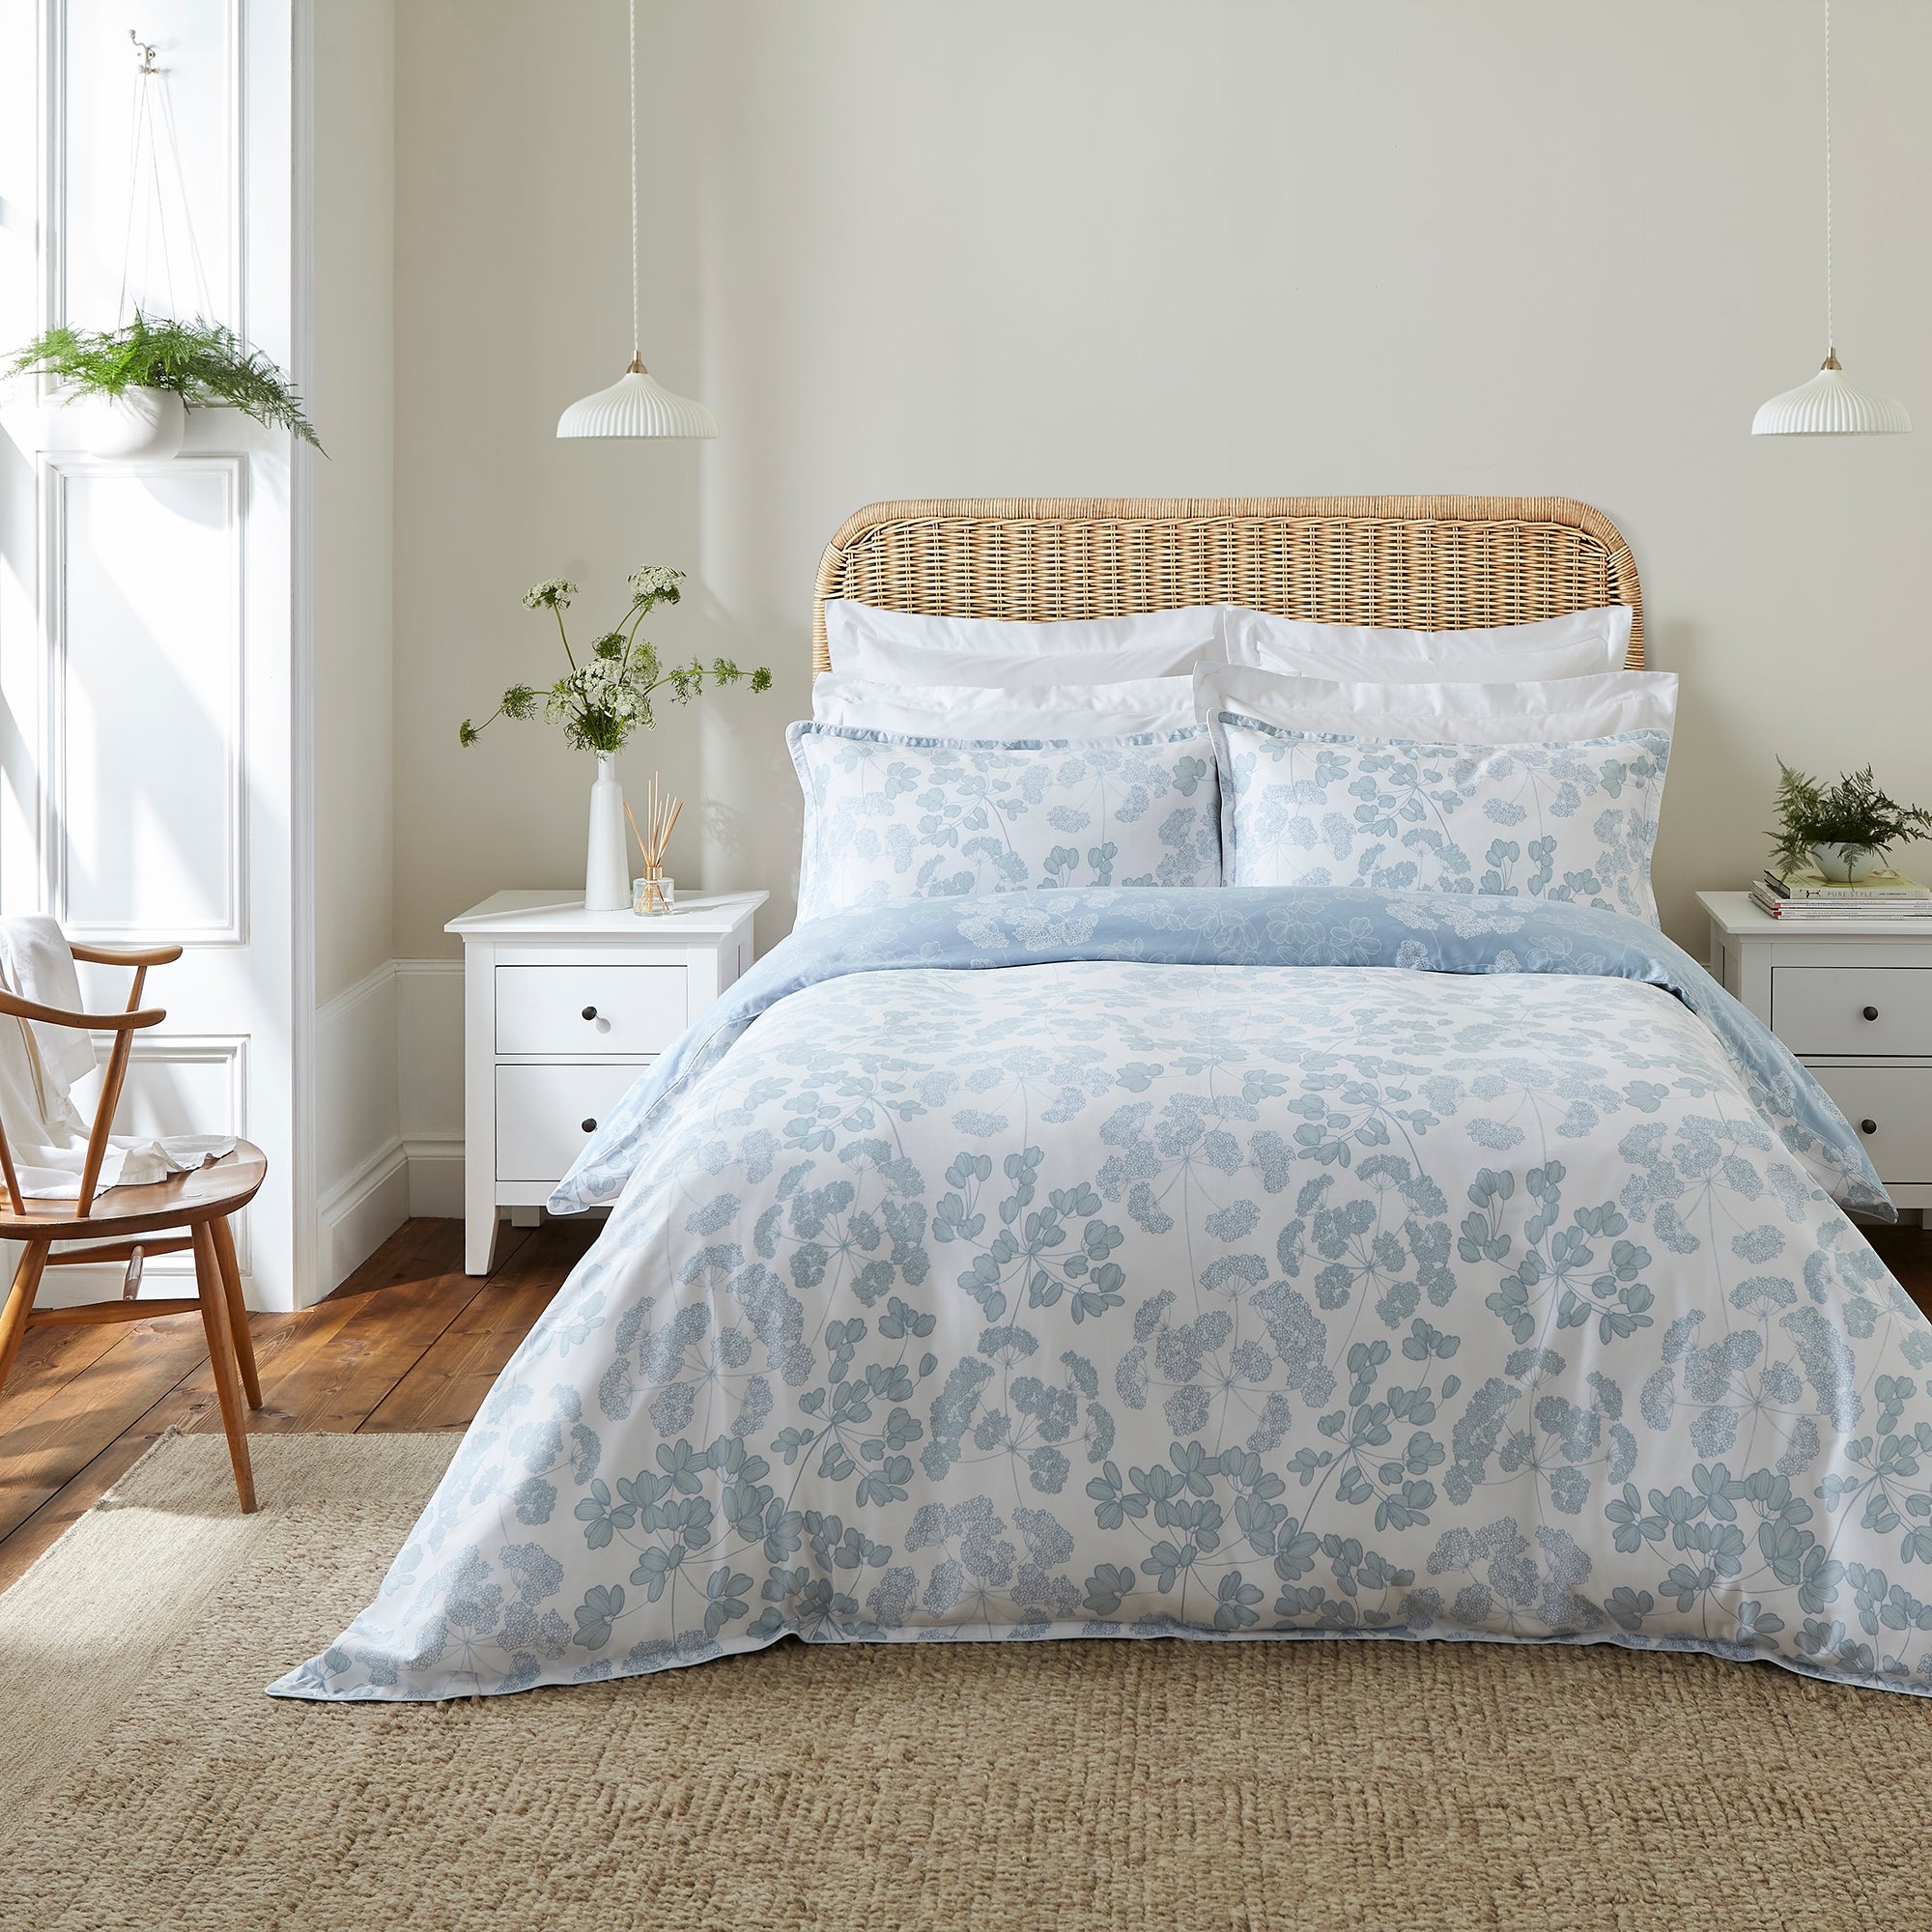 Dorma Daylesford Blue 100 Cotton Duvet Cover And Pillowcase Set Light Blue